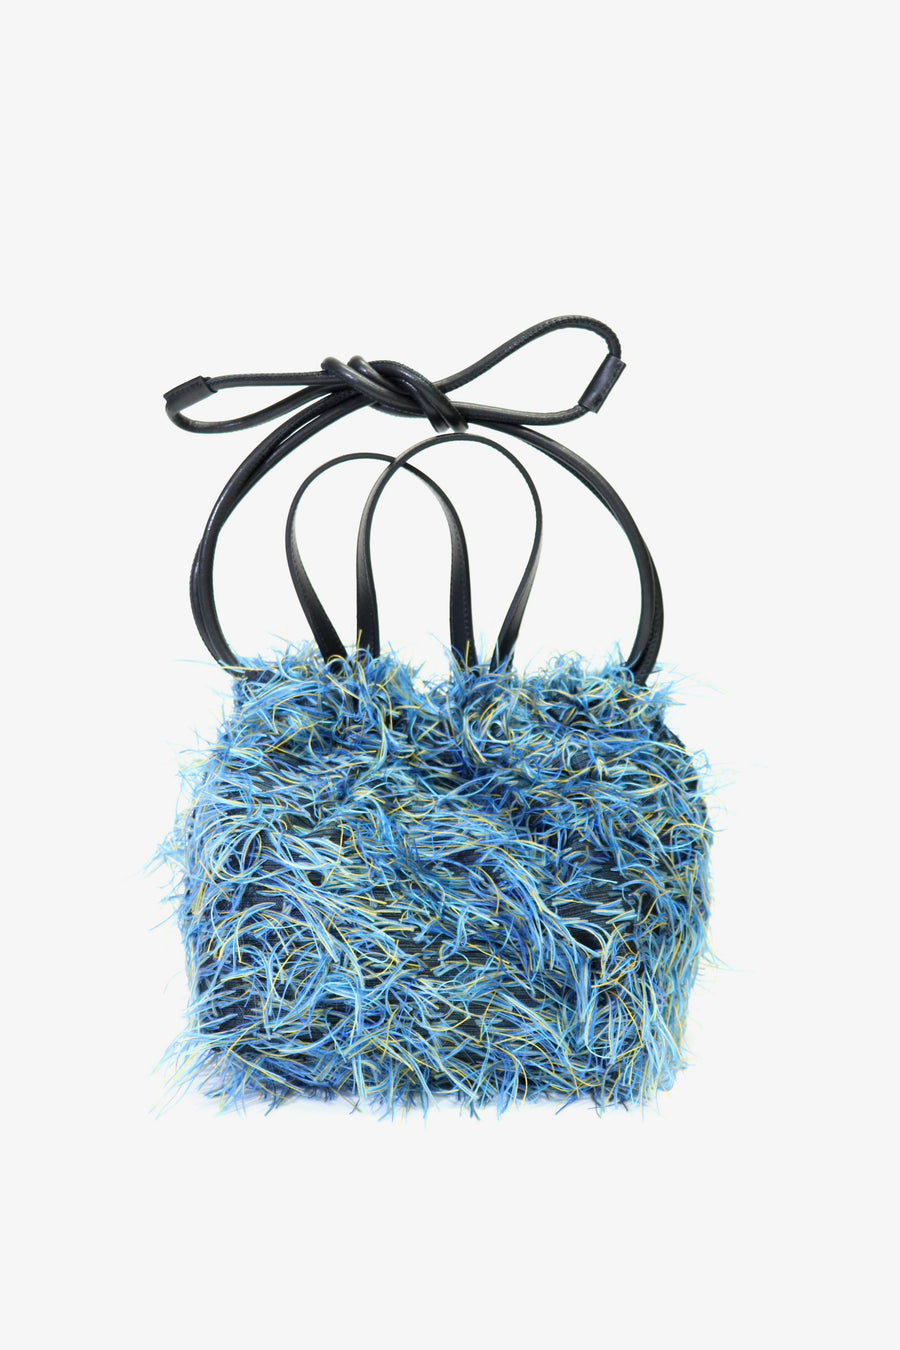 LASTFRAME  SHAGGY KINCHAKU BAG SMALL(BLUE)